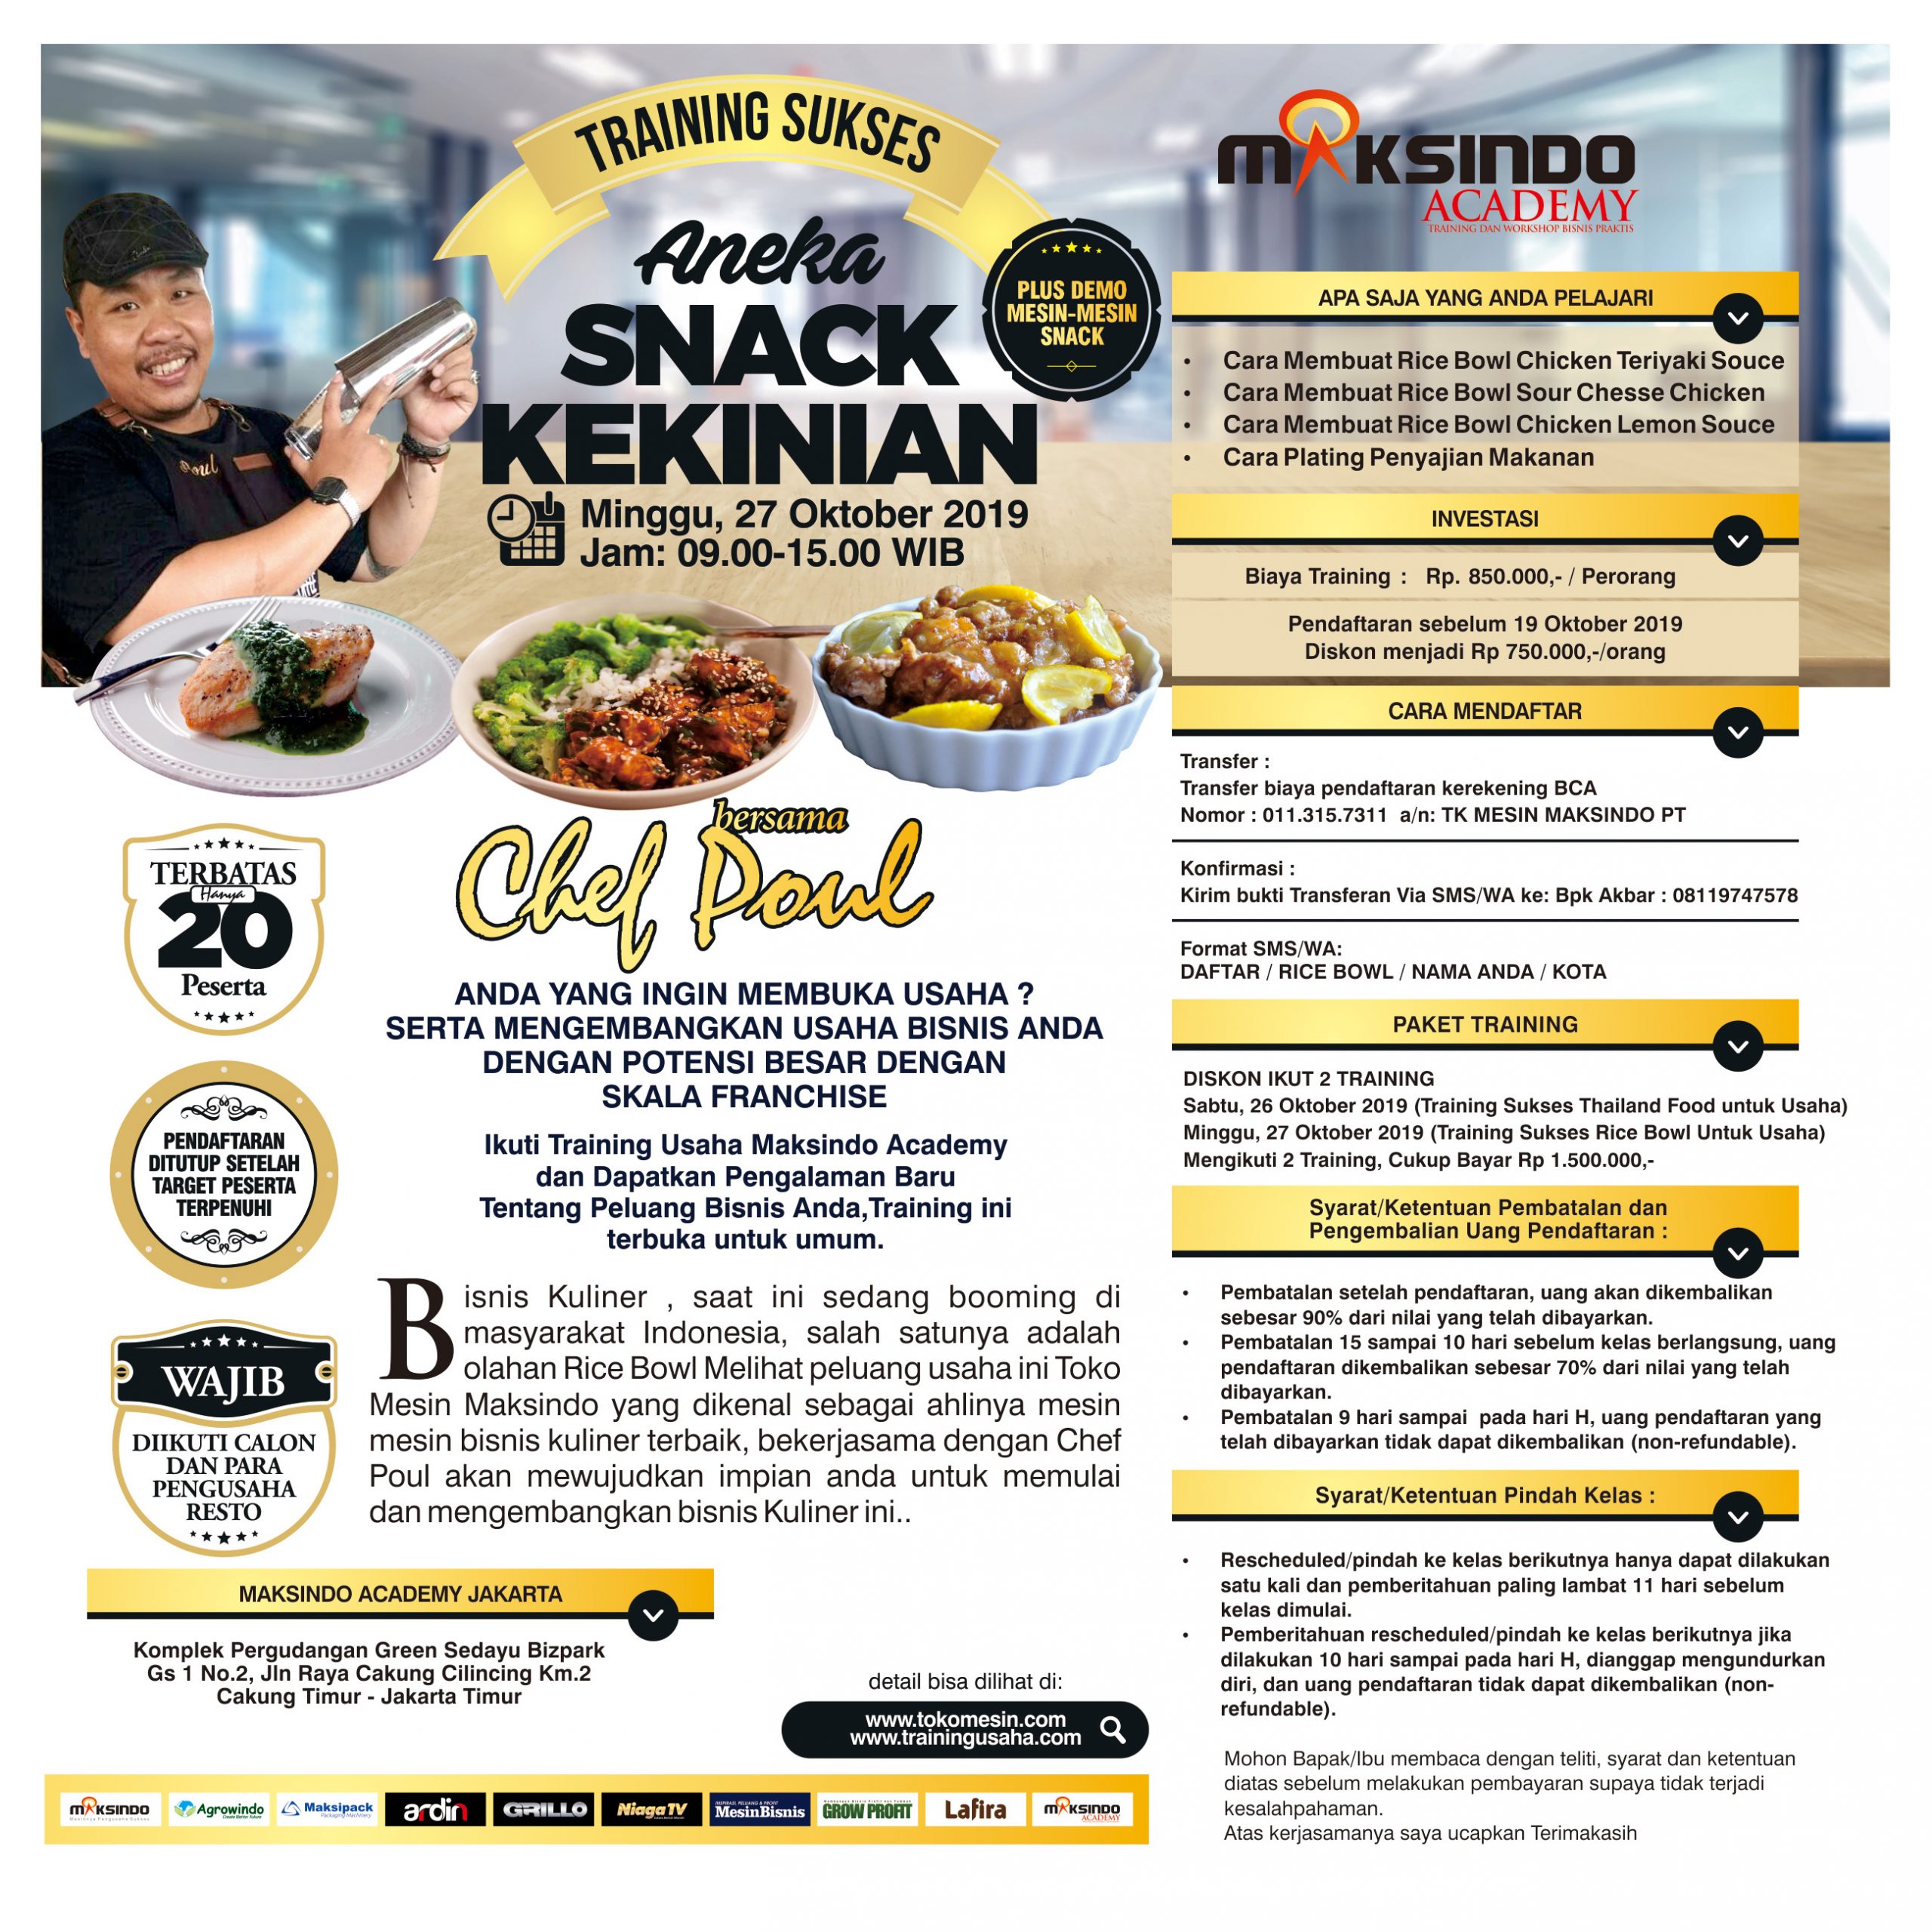 Training Usaha Aneka Snack Kekinian, Minggu 27 Oktober 2019